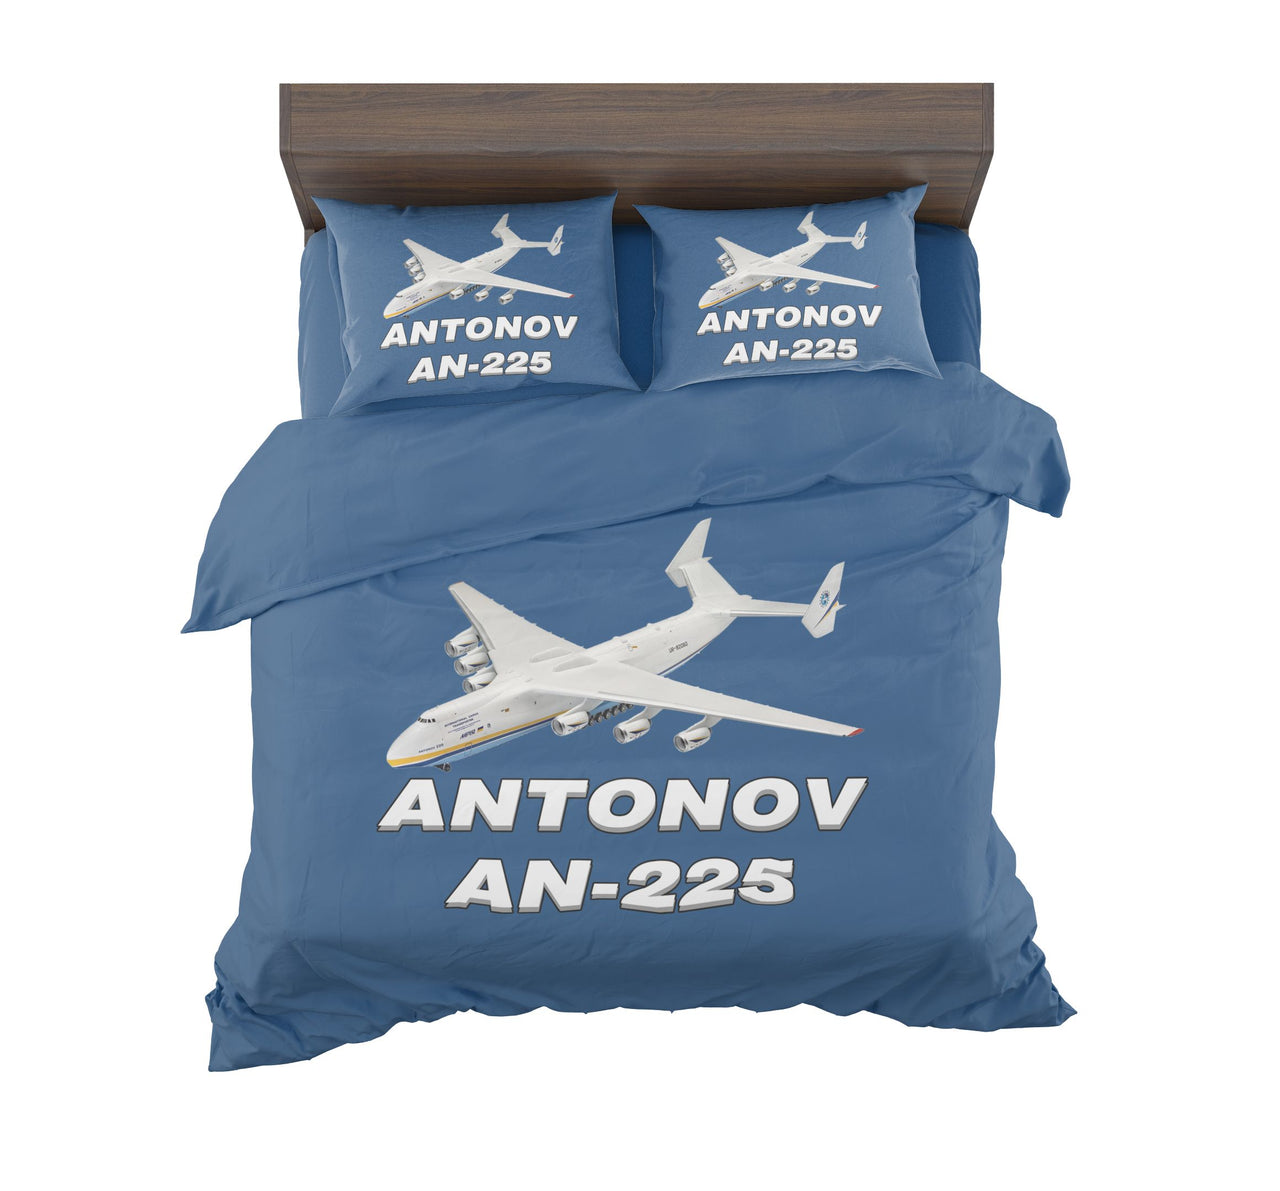 Antonov AN-225 (12) Designed Bedding Sets